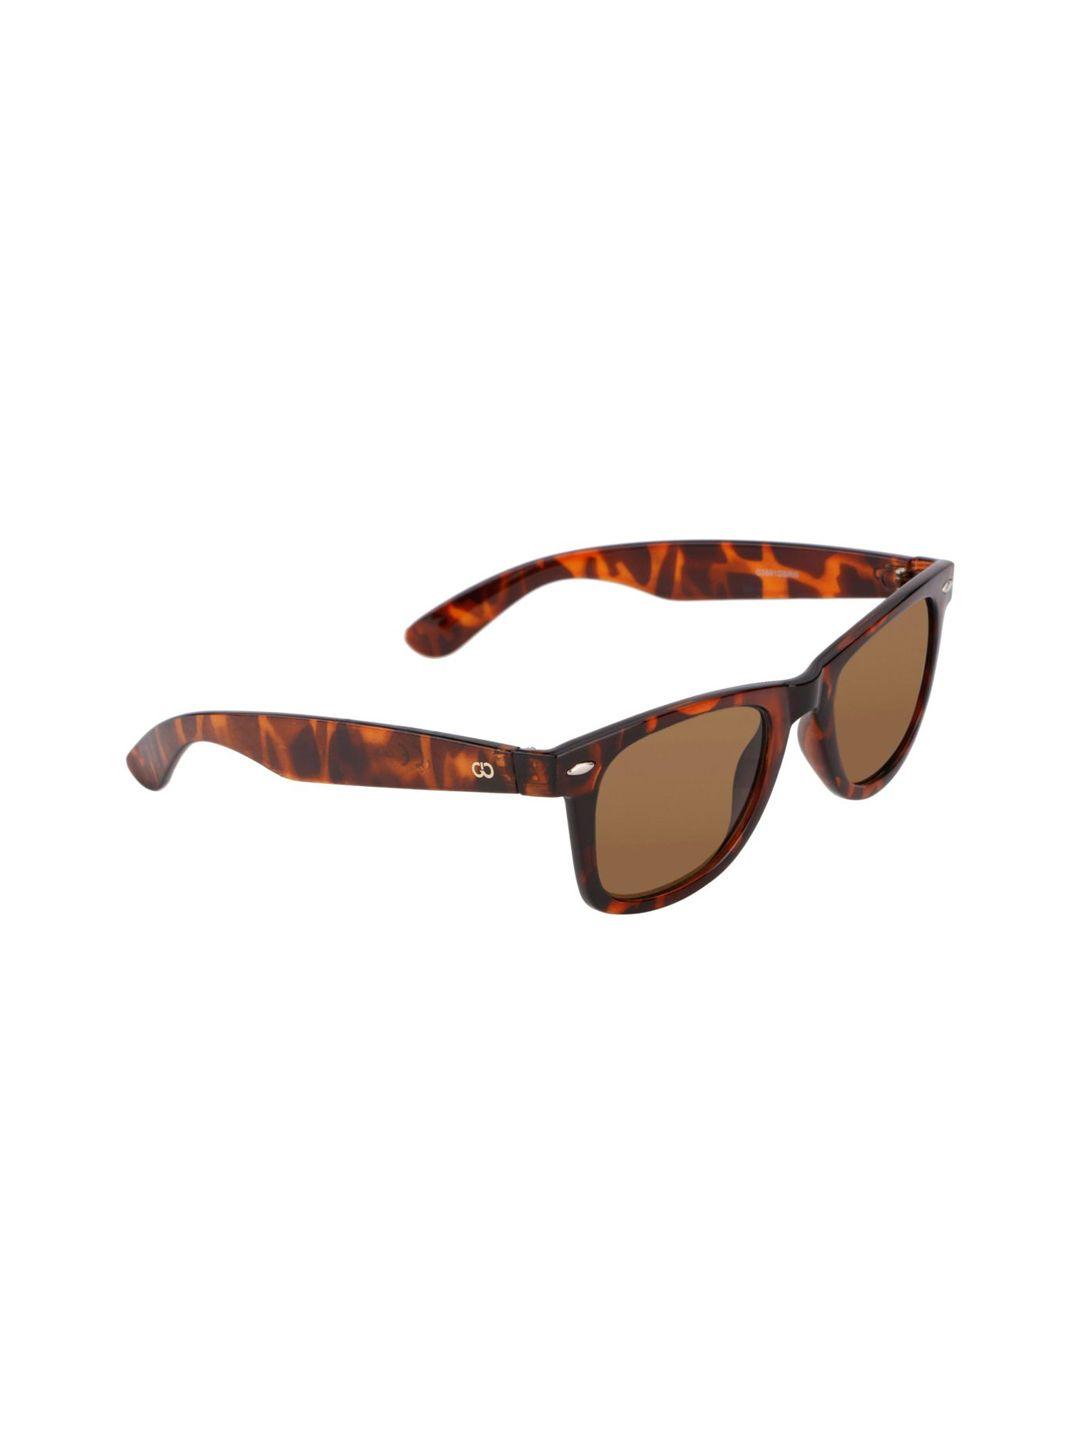 gio collection unisex wayfarer sunglasses g3891dbrw